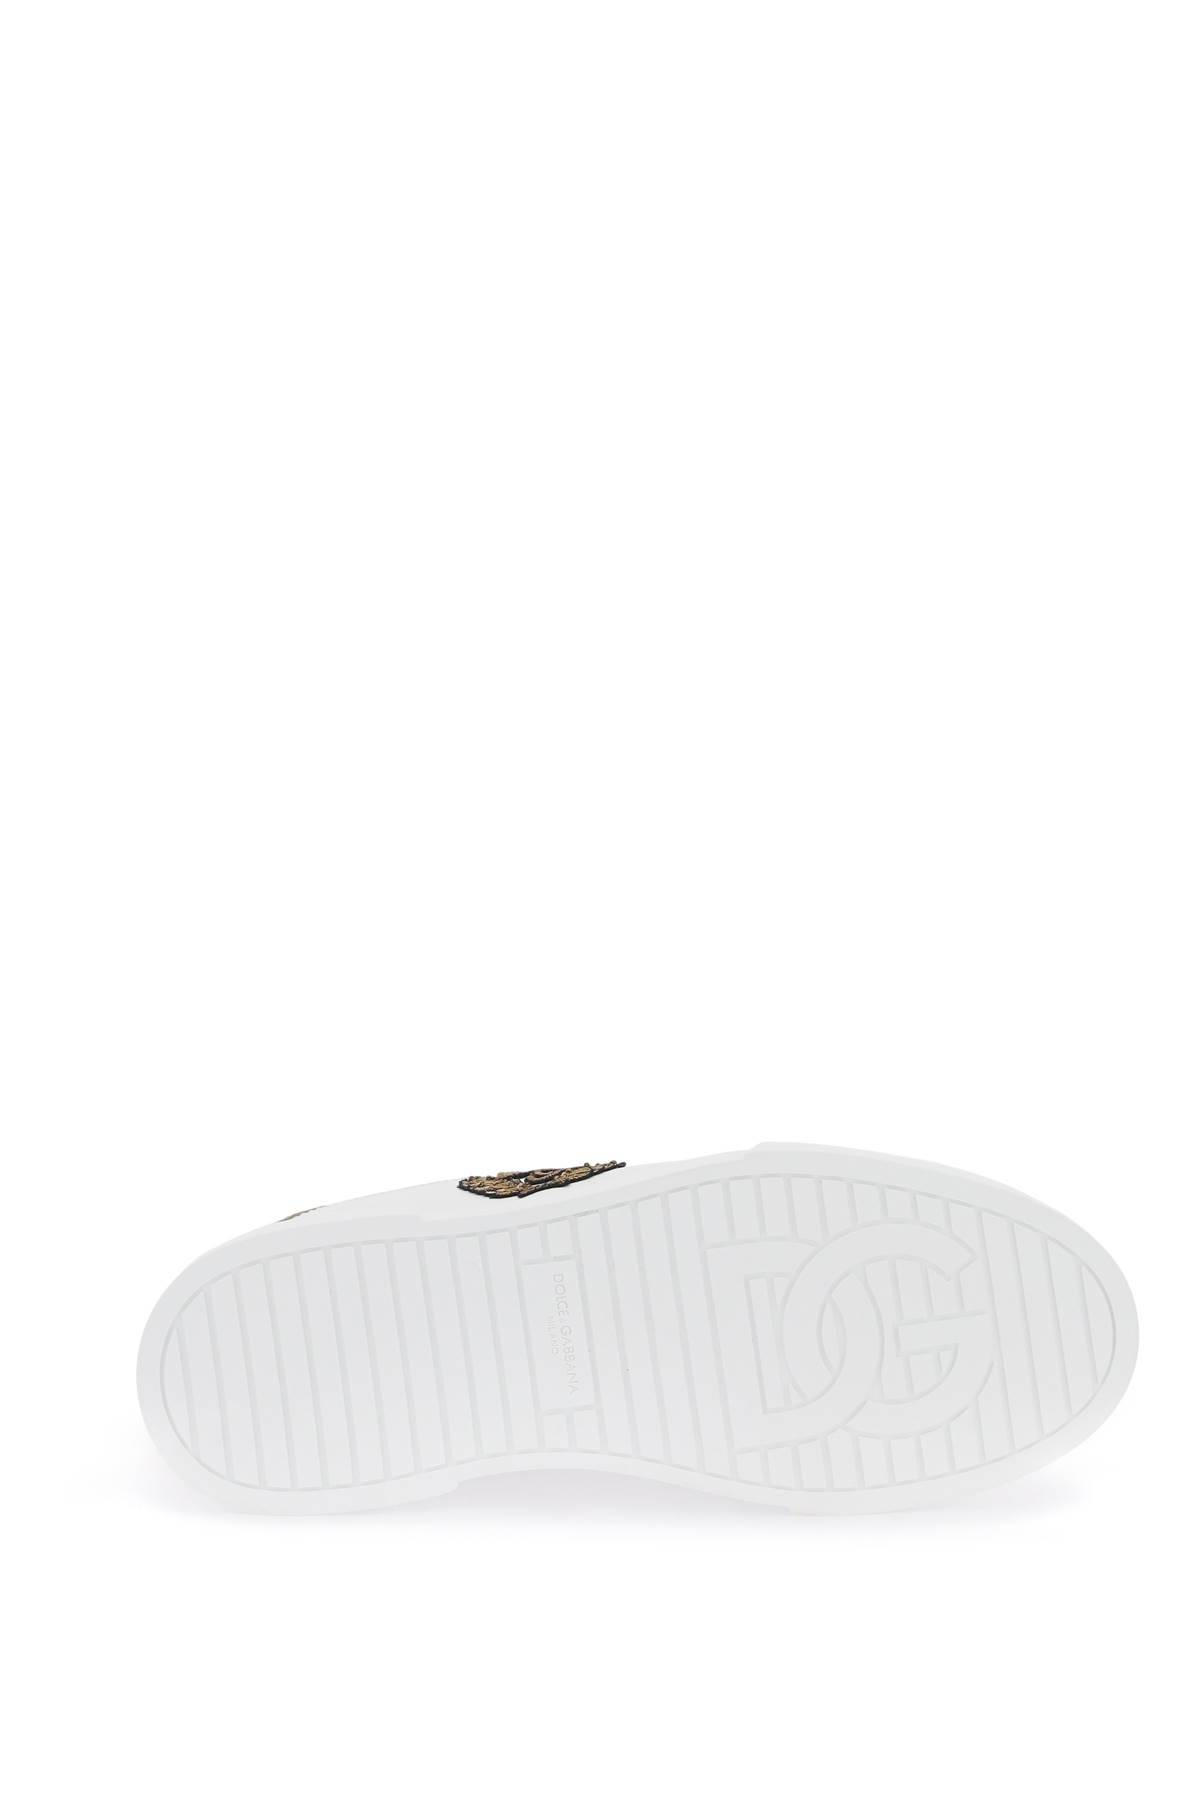 Shop Dolce & Gabbana Portofino Sneakers With Logo Patch In White,gold